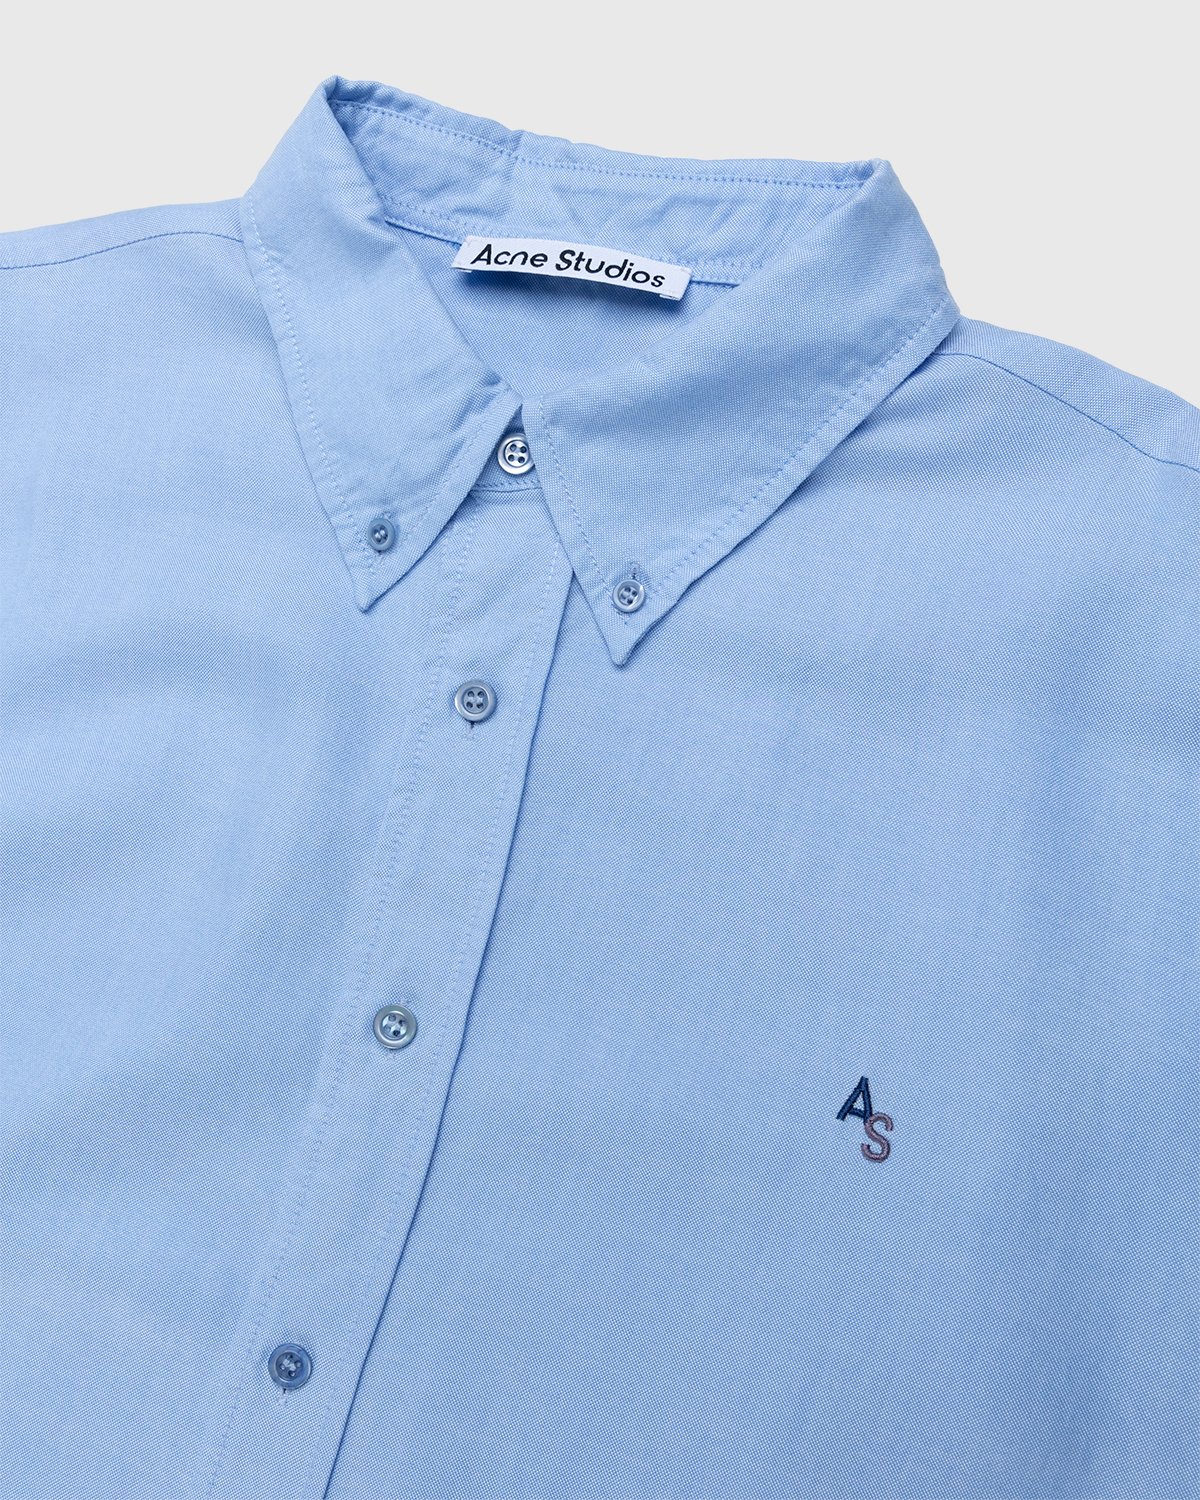 Acne Studios - Classic Monogram Button-Up Shirt Light Blue - Clothing - Blue - Image 4